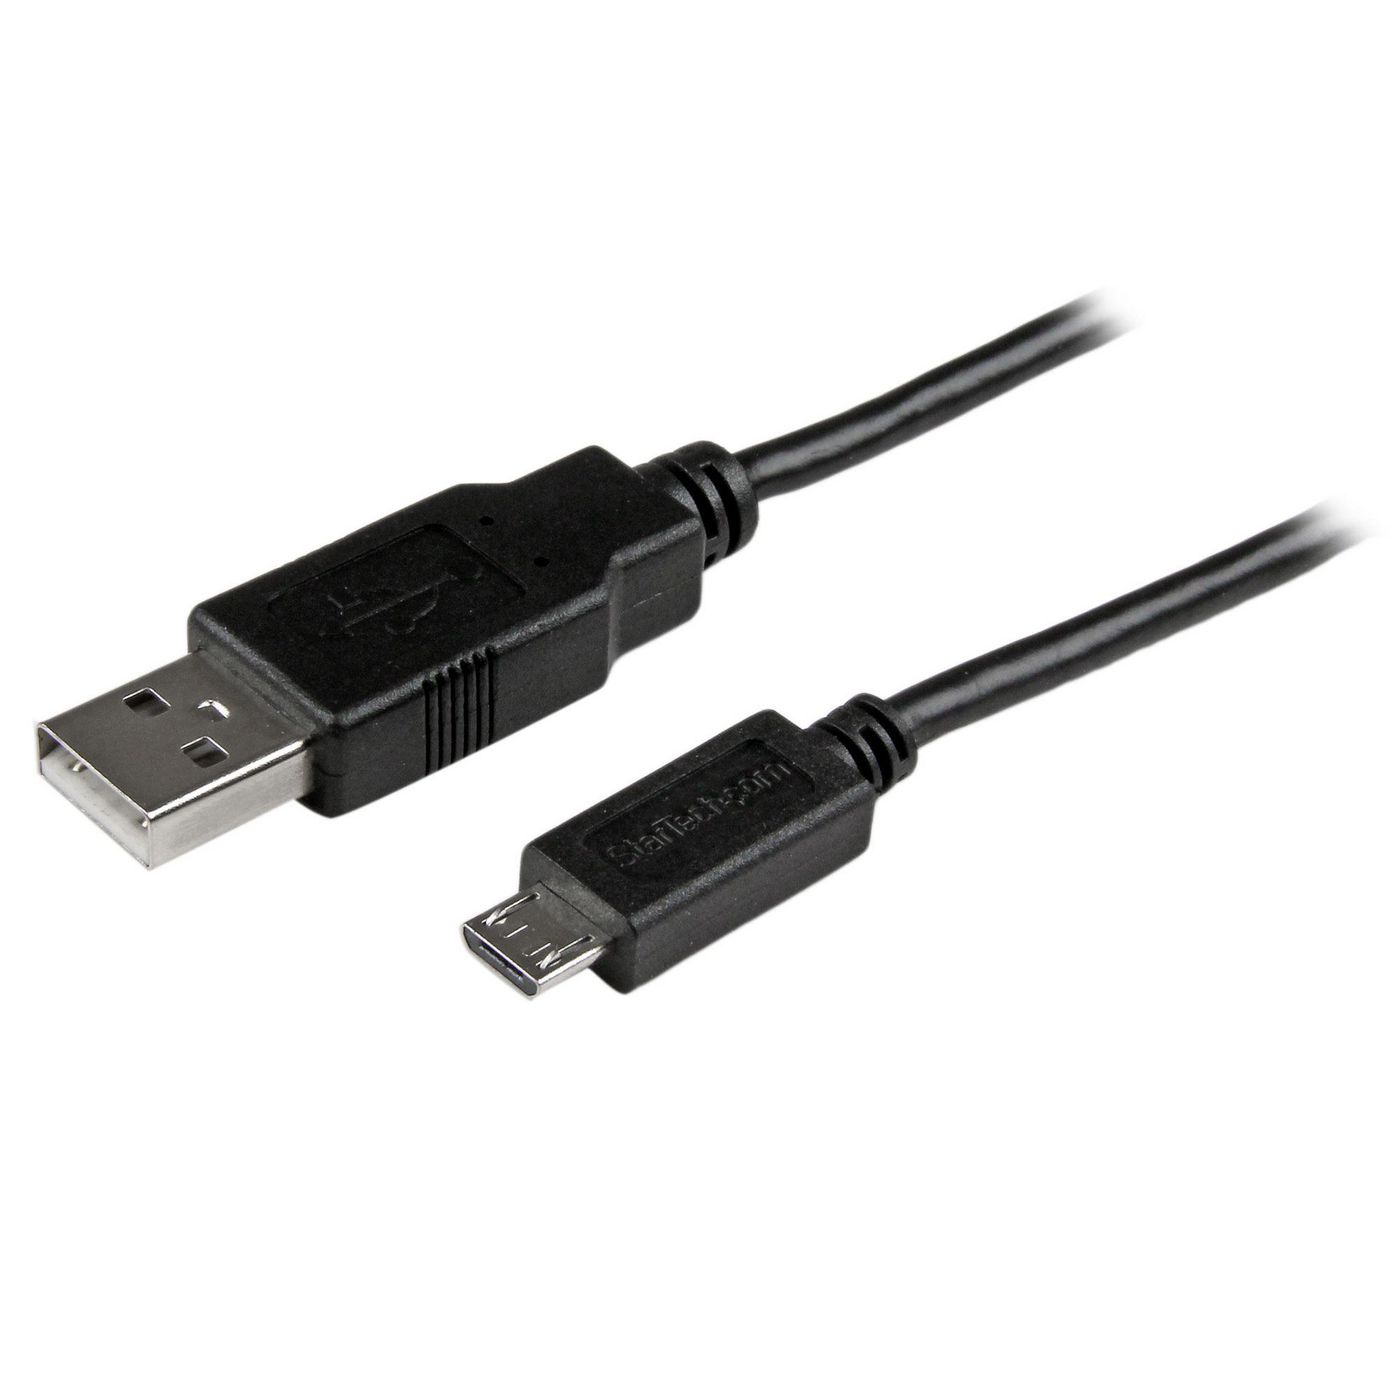 STARTECH.COM 1m Micro USB Ladekabel für Android Smartphones und Tablets - USB A auf Micro B Kabel /